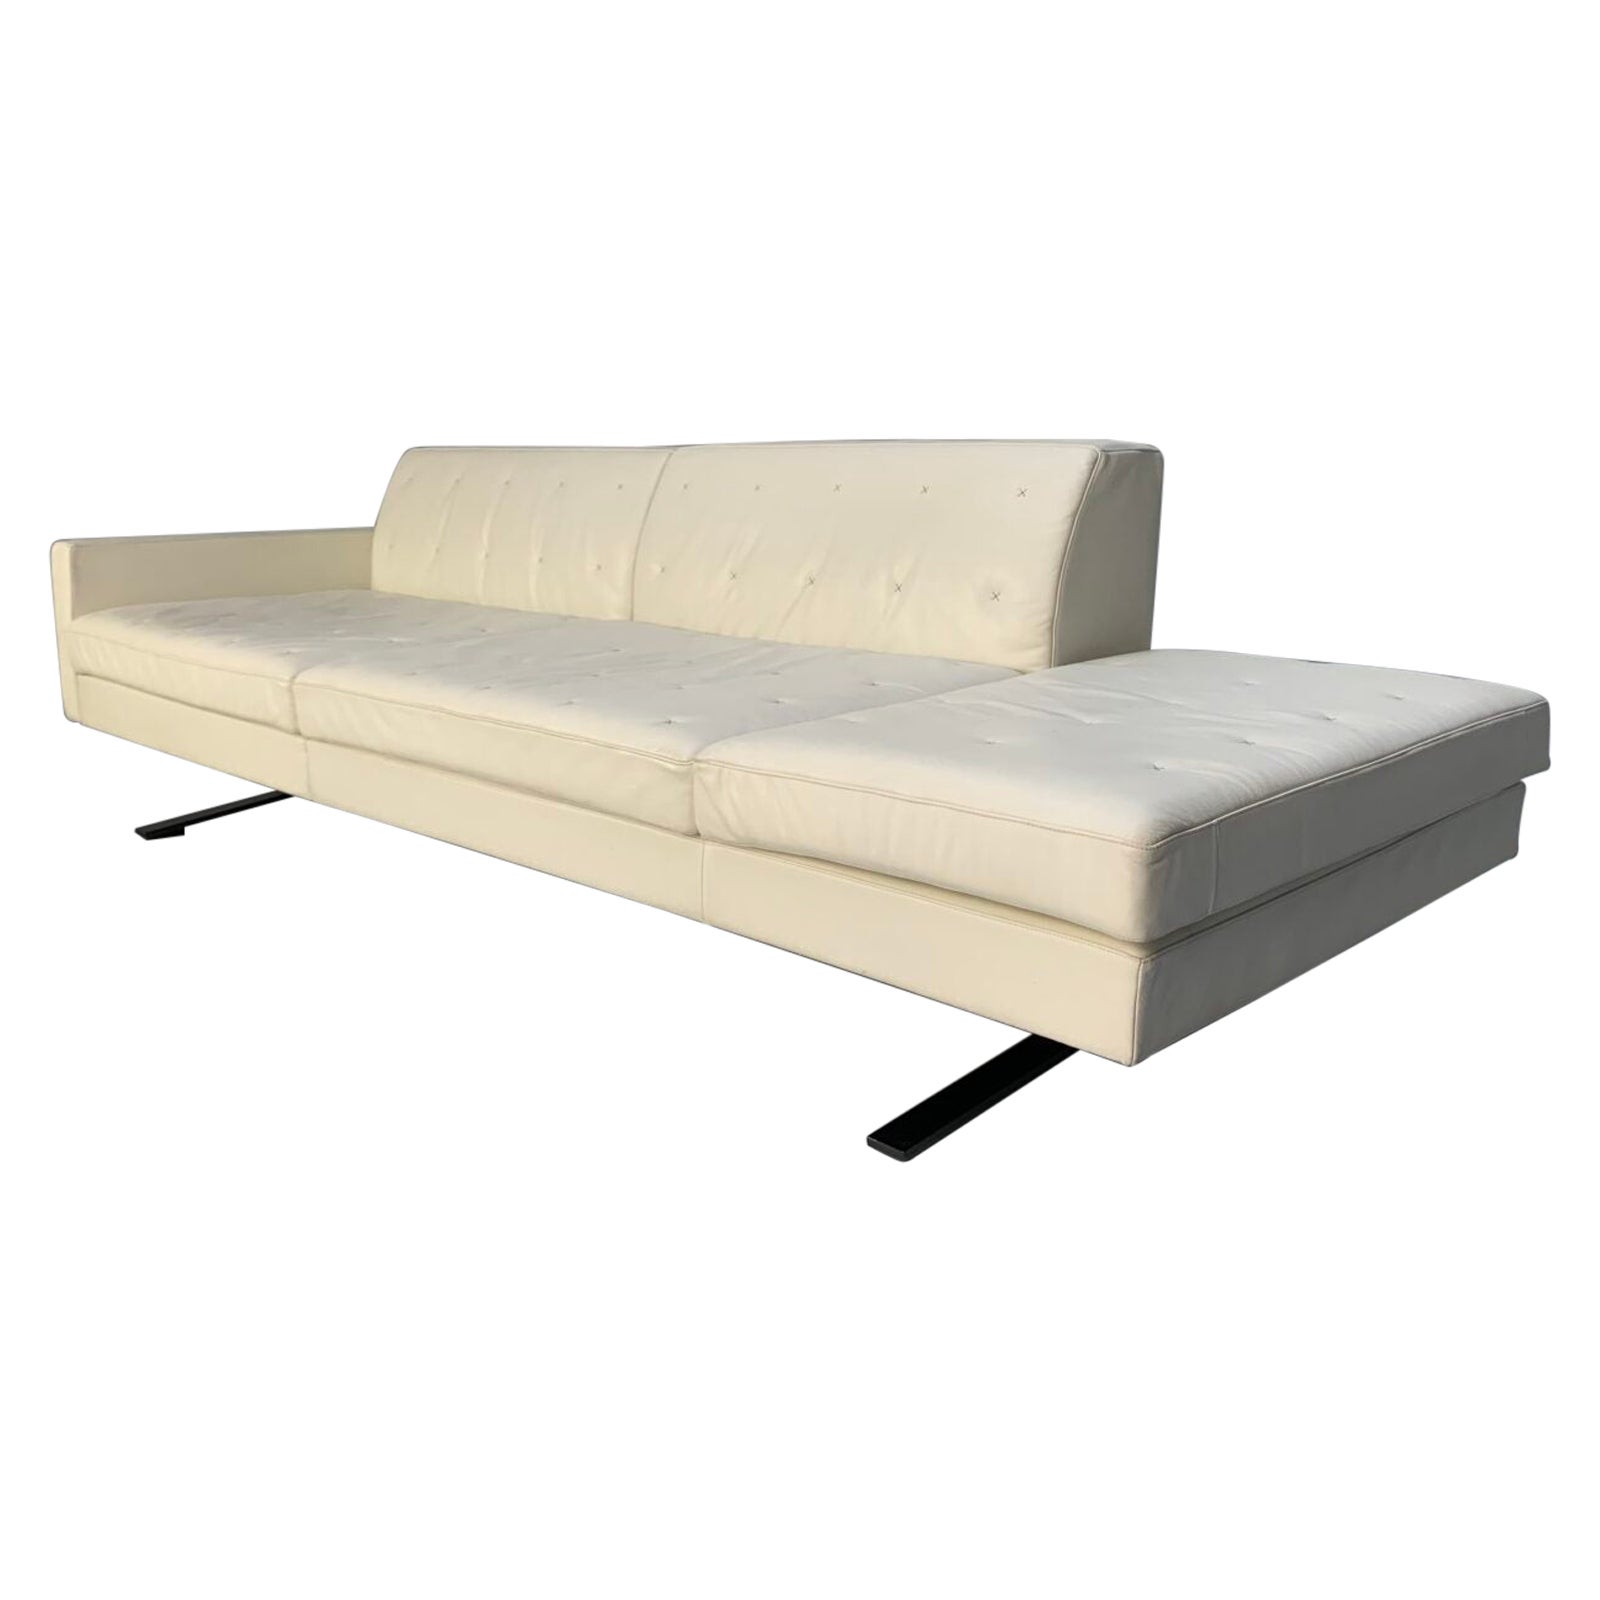 Poltrona Frau “Kennedee” 3-Seat Sofa – In Ivory “Pelle Frau” Leather For Sale